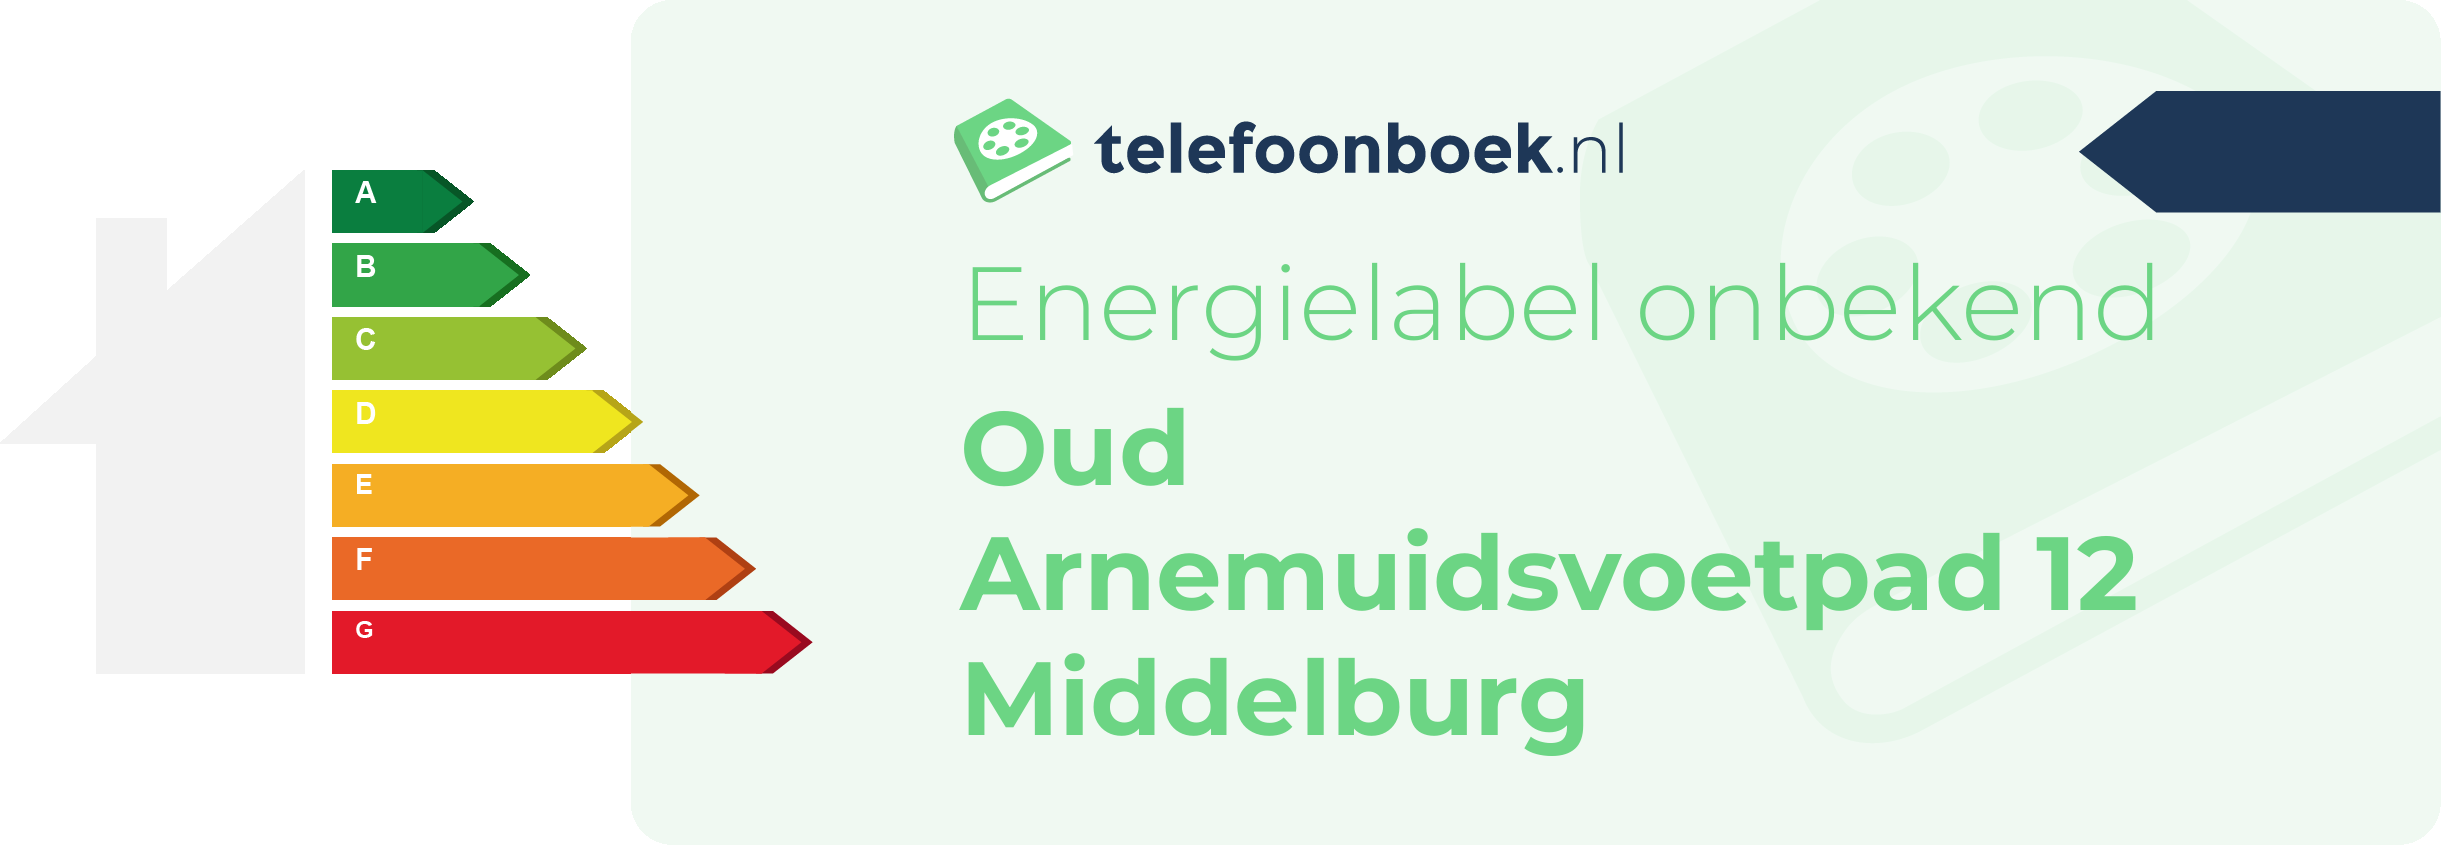 Energielabel Oud Arnemuidsvoetpad 12 Middelburg